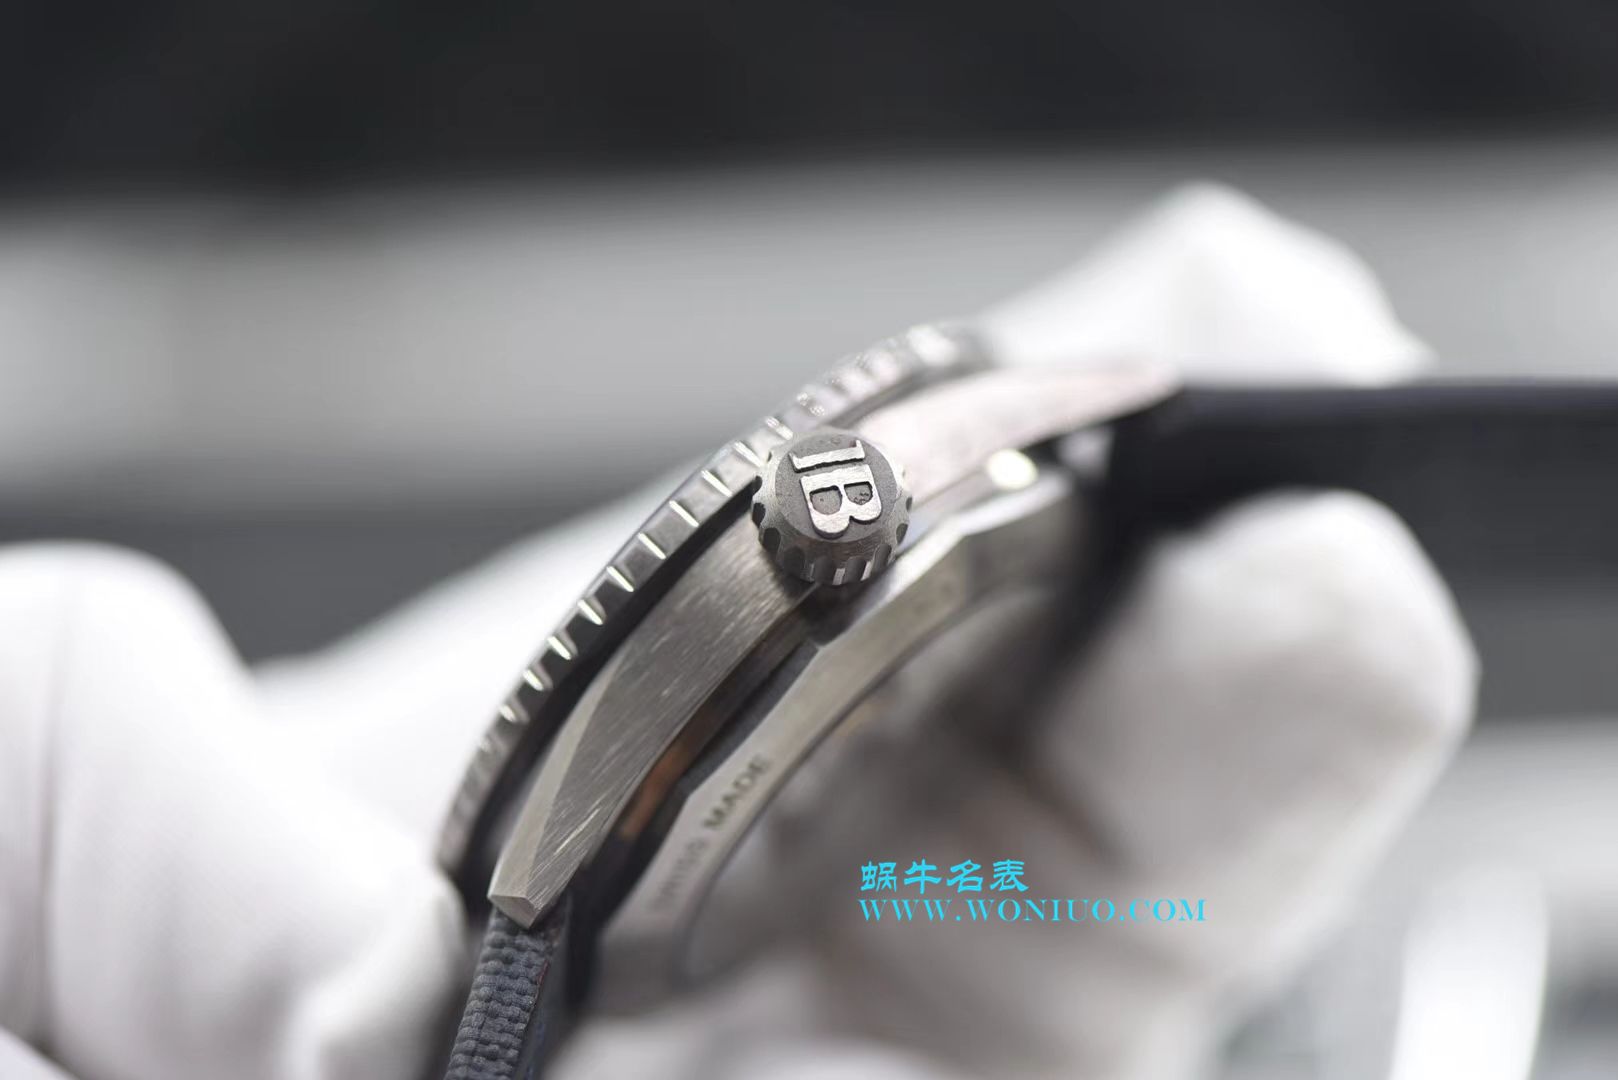 【ZF一比一超A高仿手表】宝珀五十噚系列5000-0240-O52A腕表 / BP051